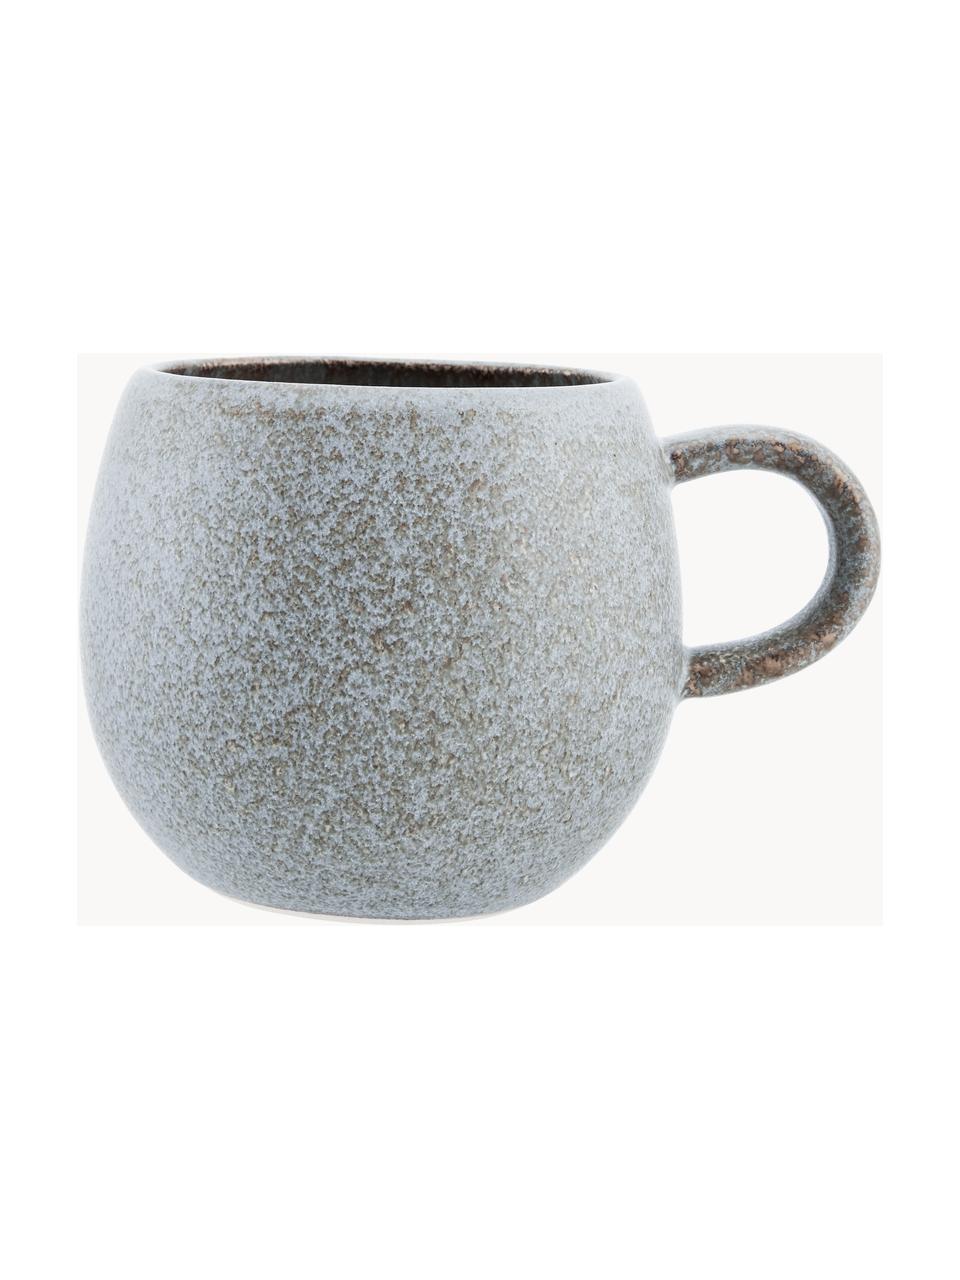 Tazas de té artesanales Addison, 3 uds., Cerámica de gres, Gris, turrón y Off White jaspeado, Ø 11 x Al 10 cm, 500 ml